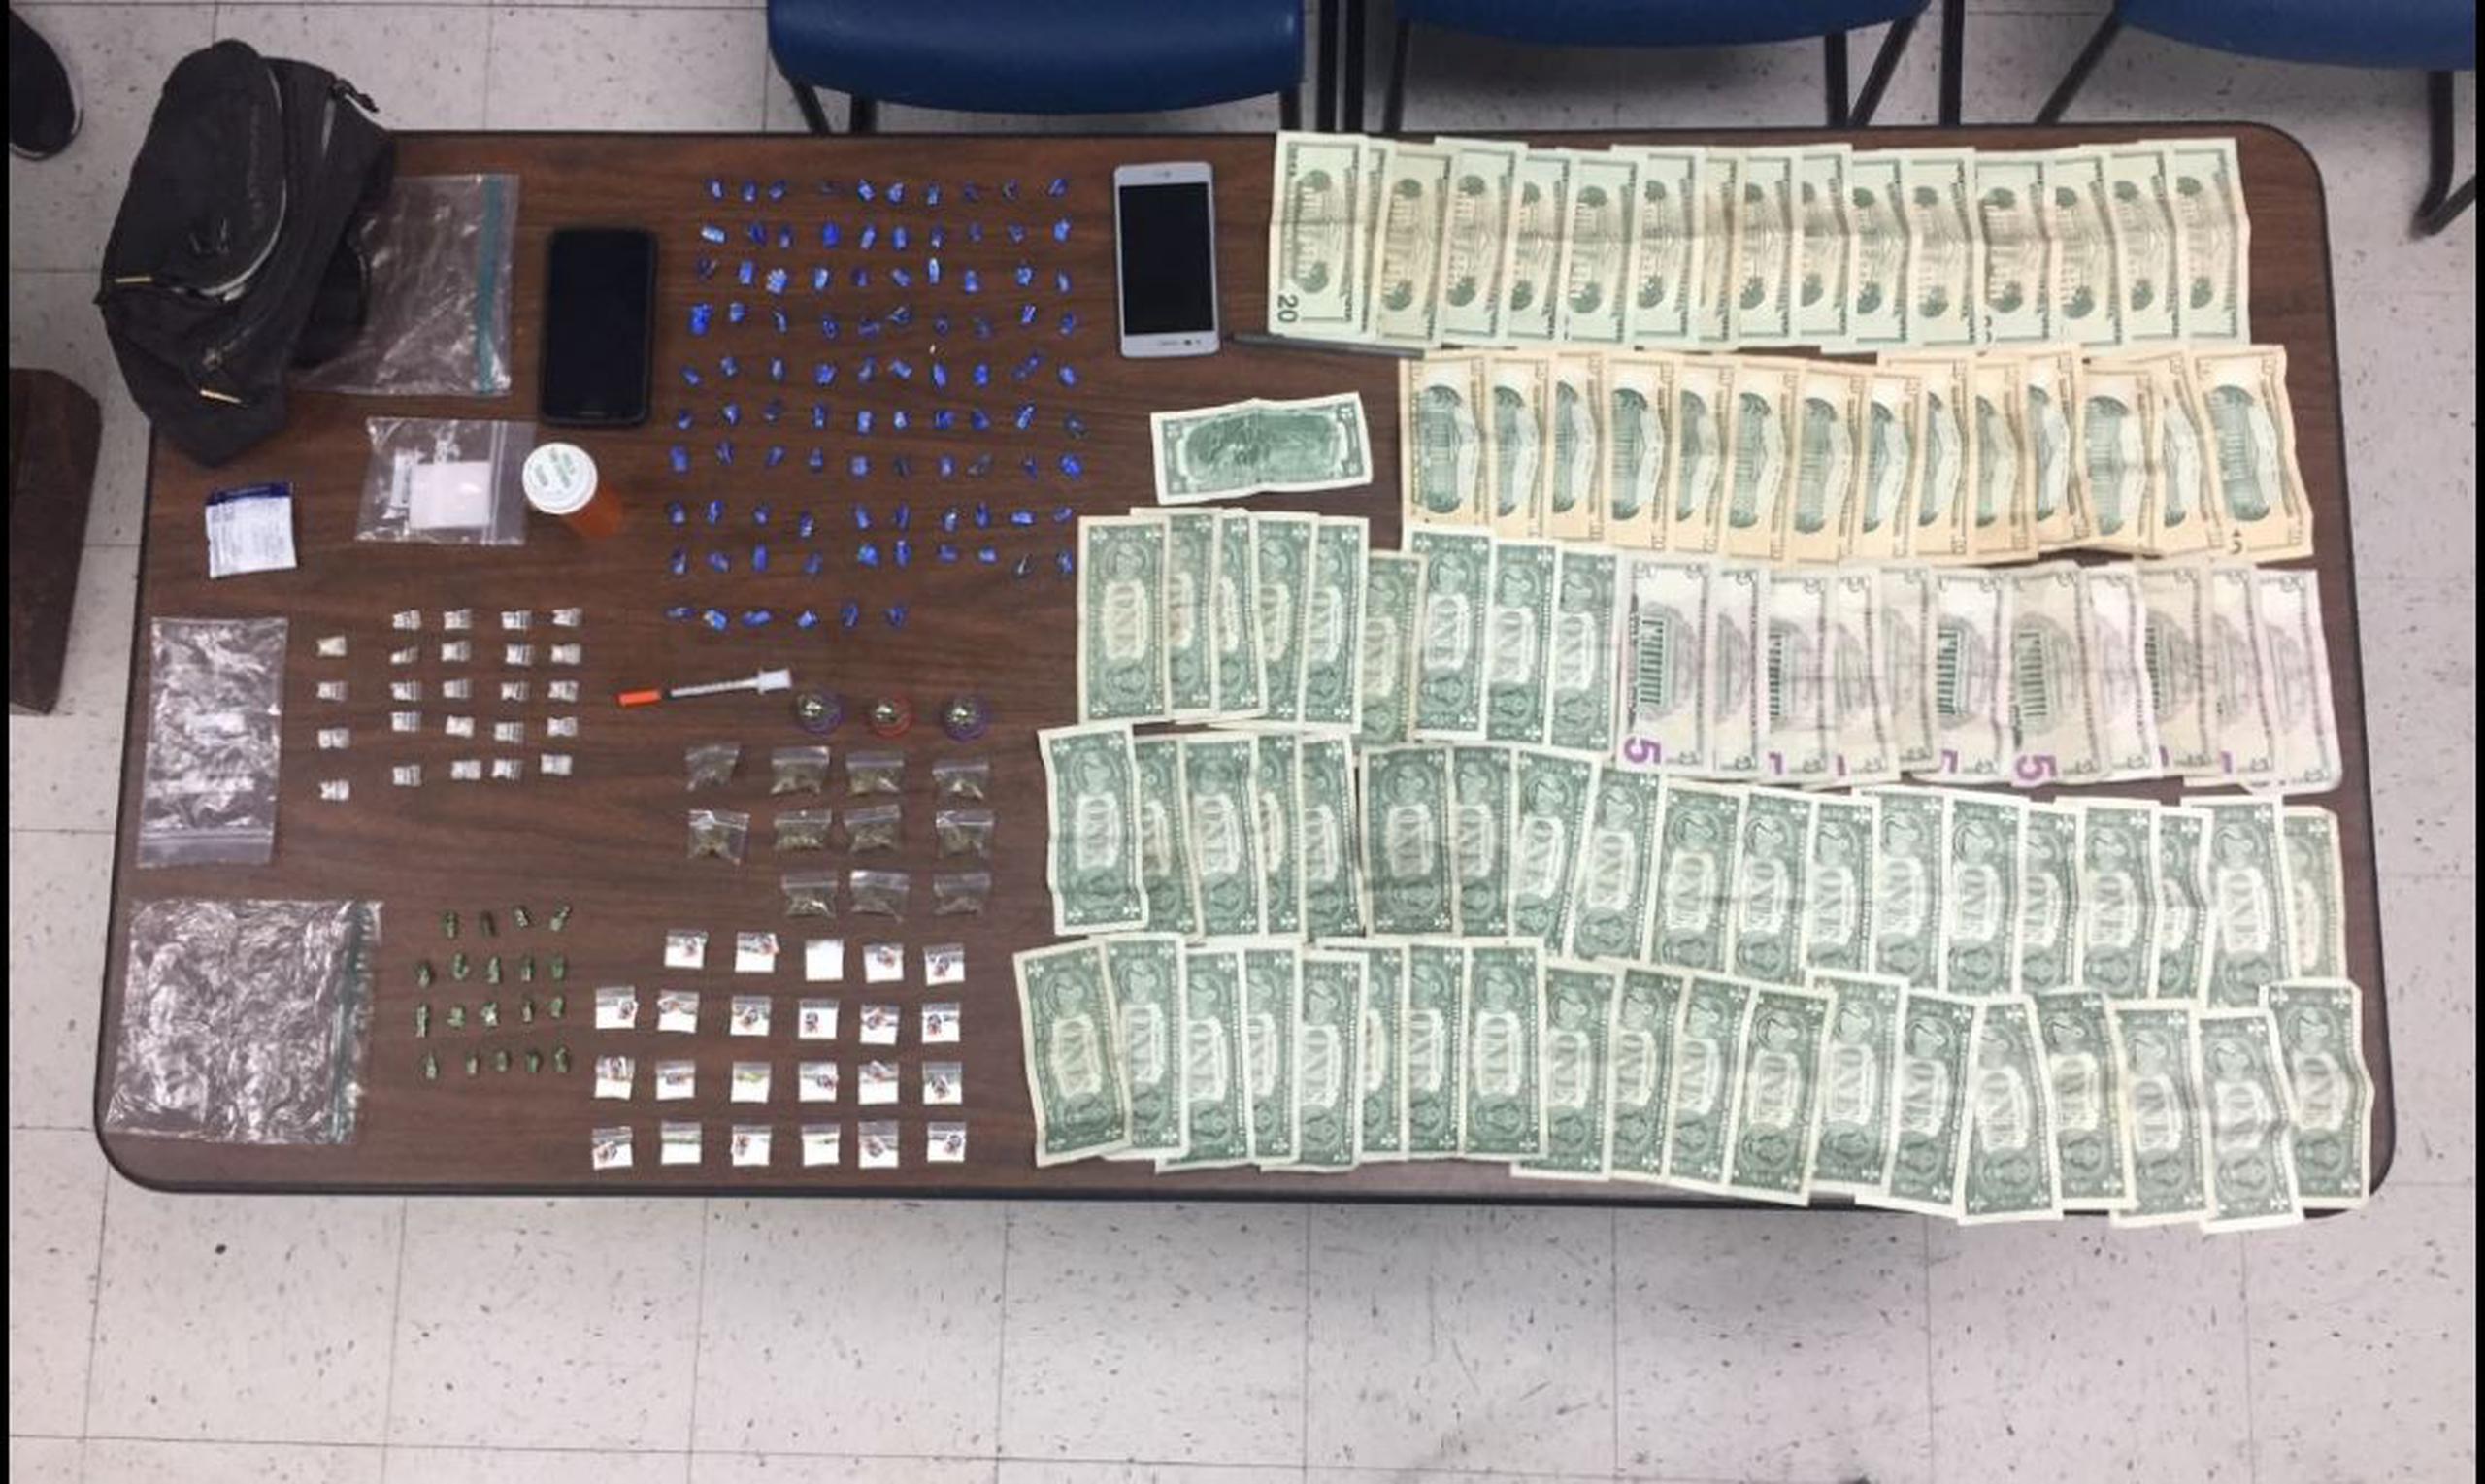 Al hombre se le ocuparon 115 decks de heroína, 24 bolsas de crack y 23 bolsas de cocaína, entre otros. (Suministrada)